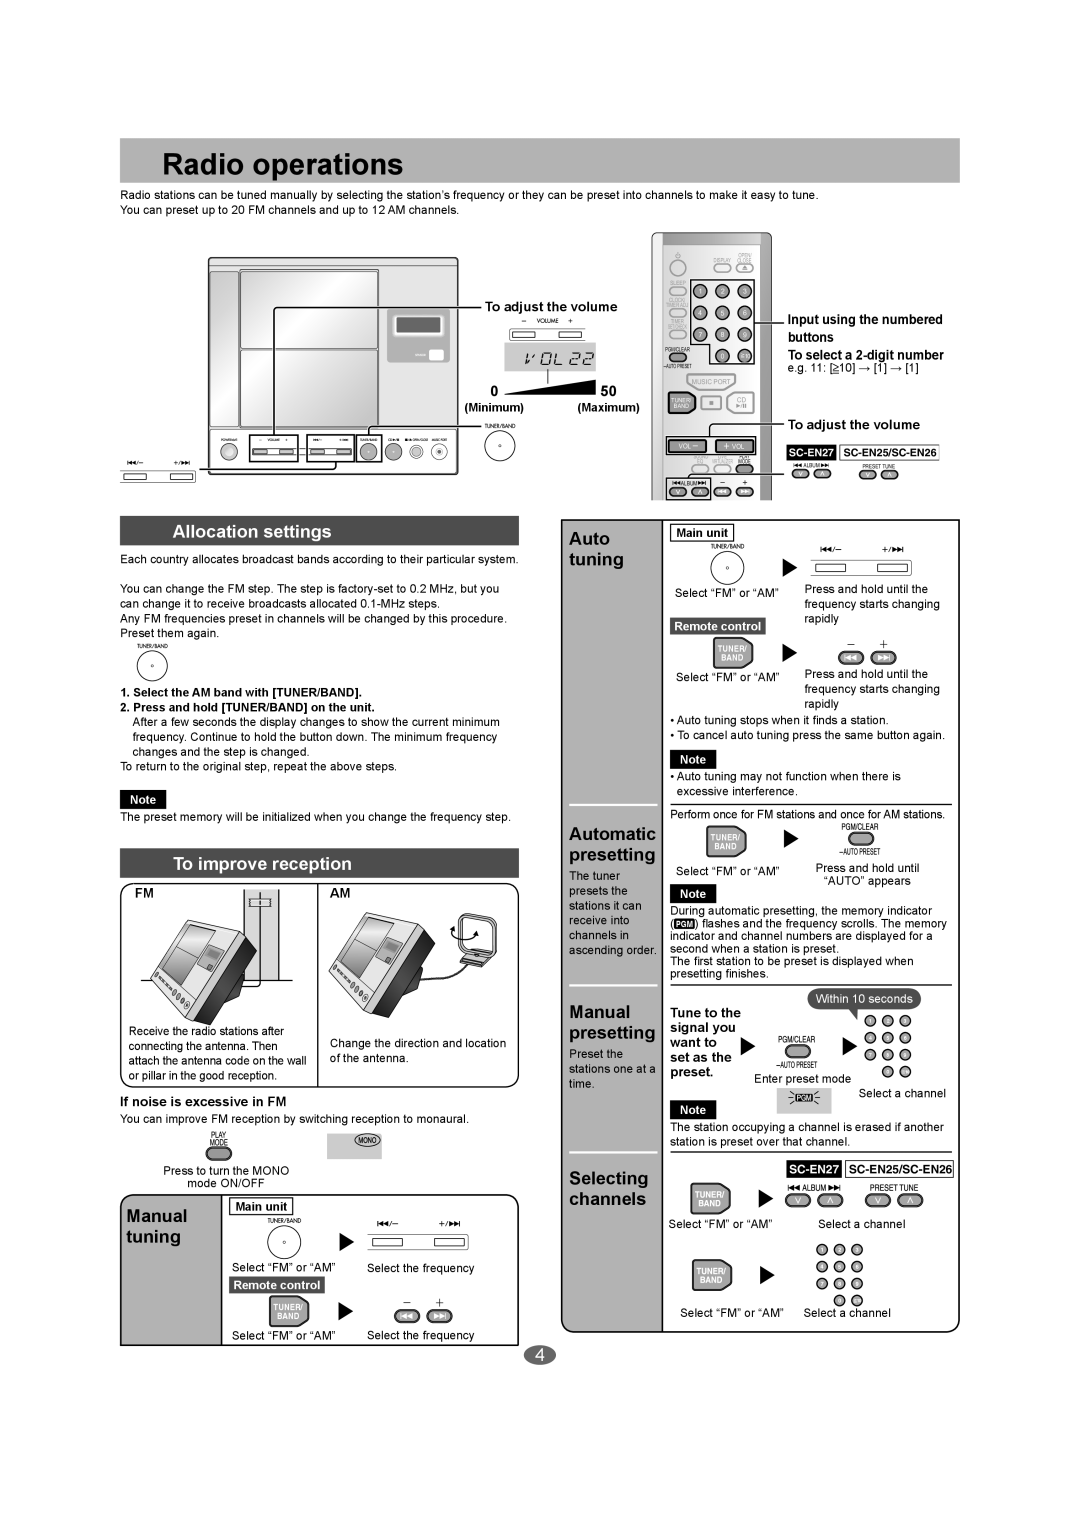 Panasonic SC-EN25 Radio operations, tuning, Automatic presetting, Manual presetting, Selecting channels, e.g, Maximum 